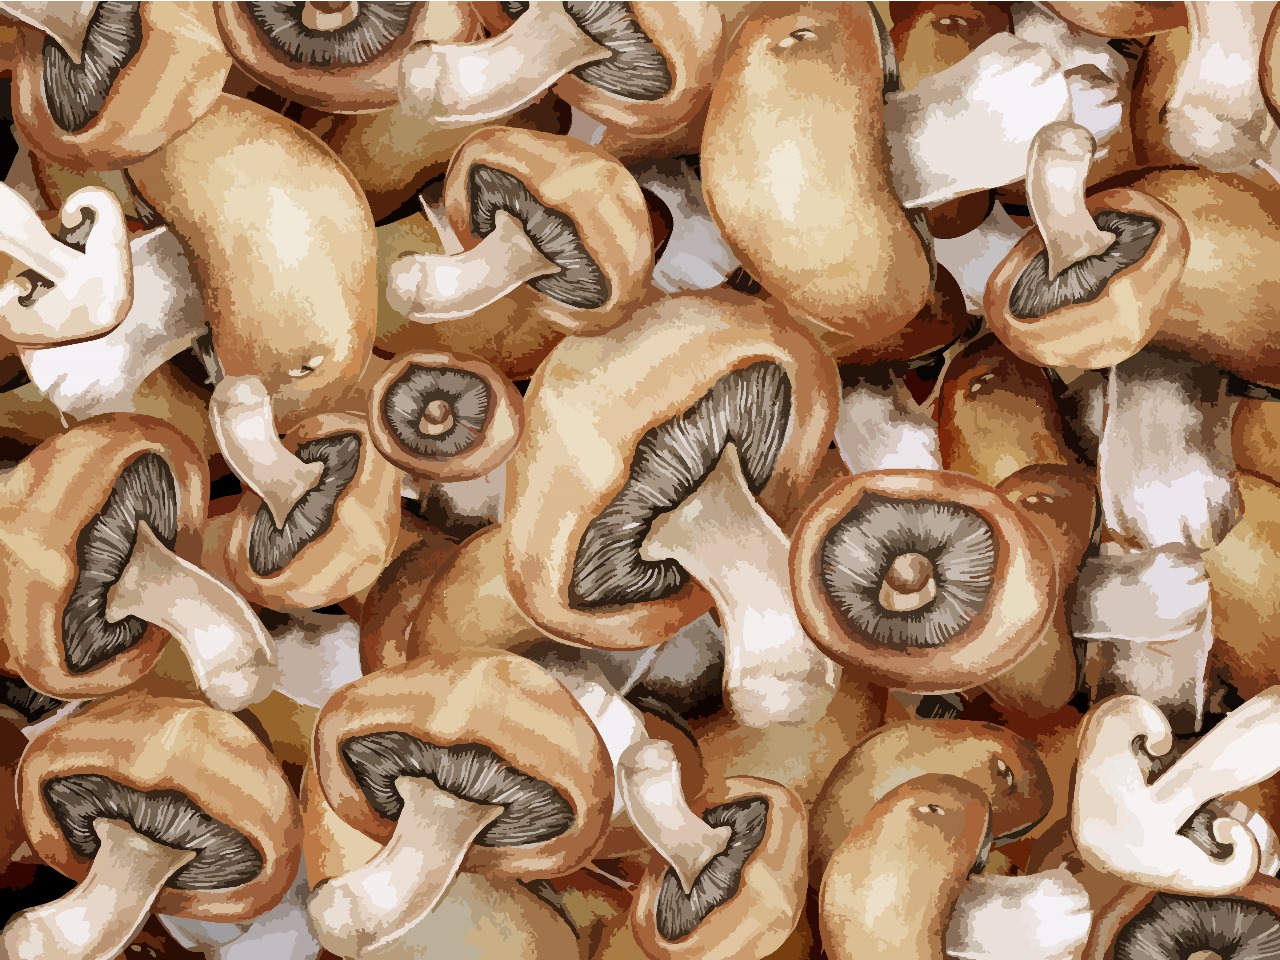 Do mushrooms have medicinal properties?